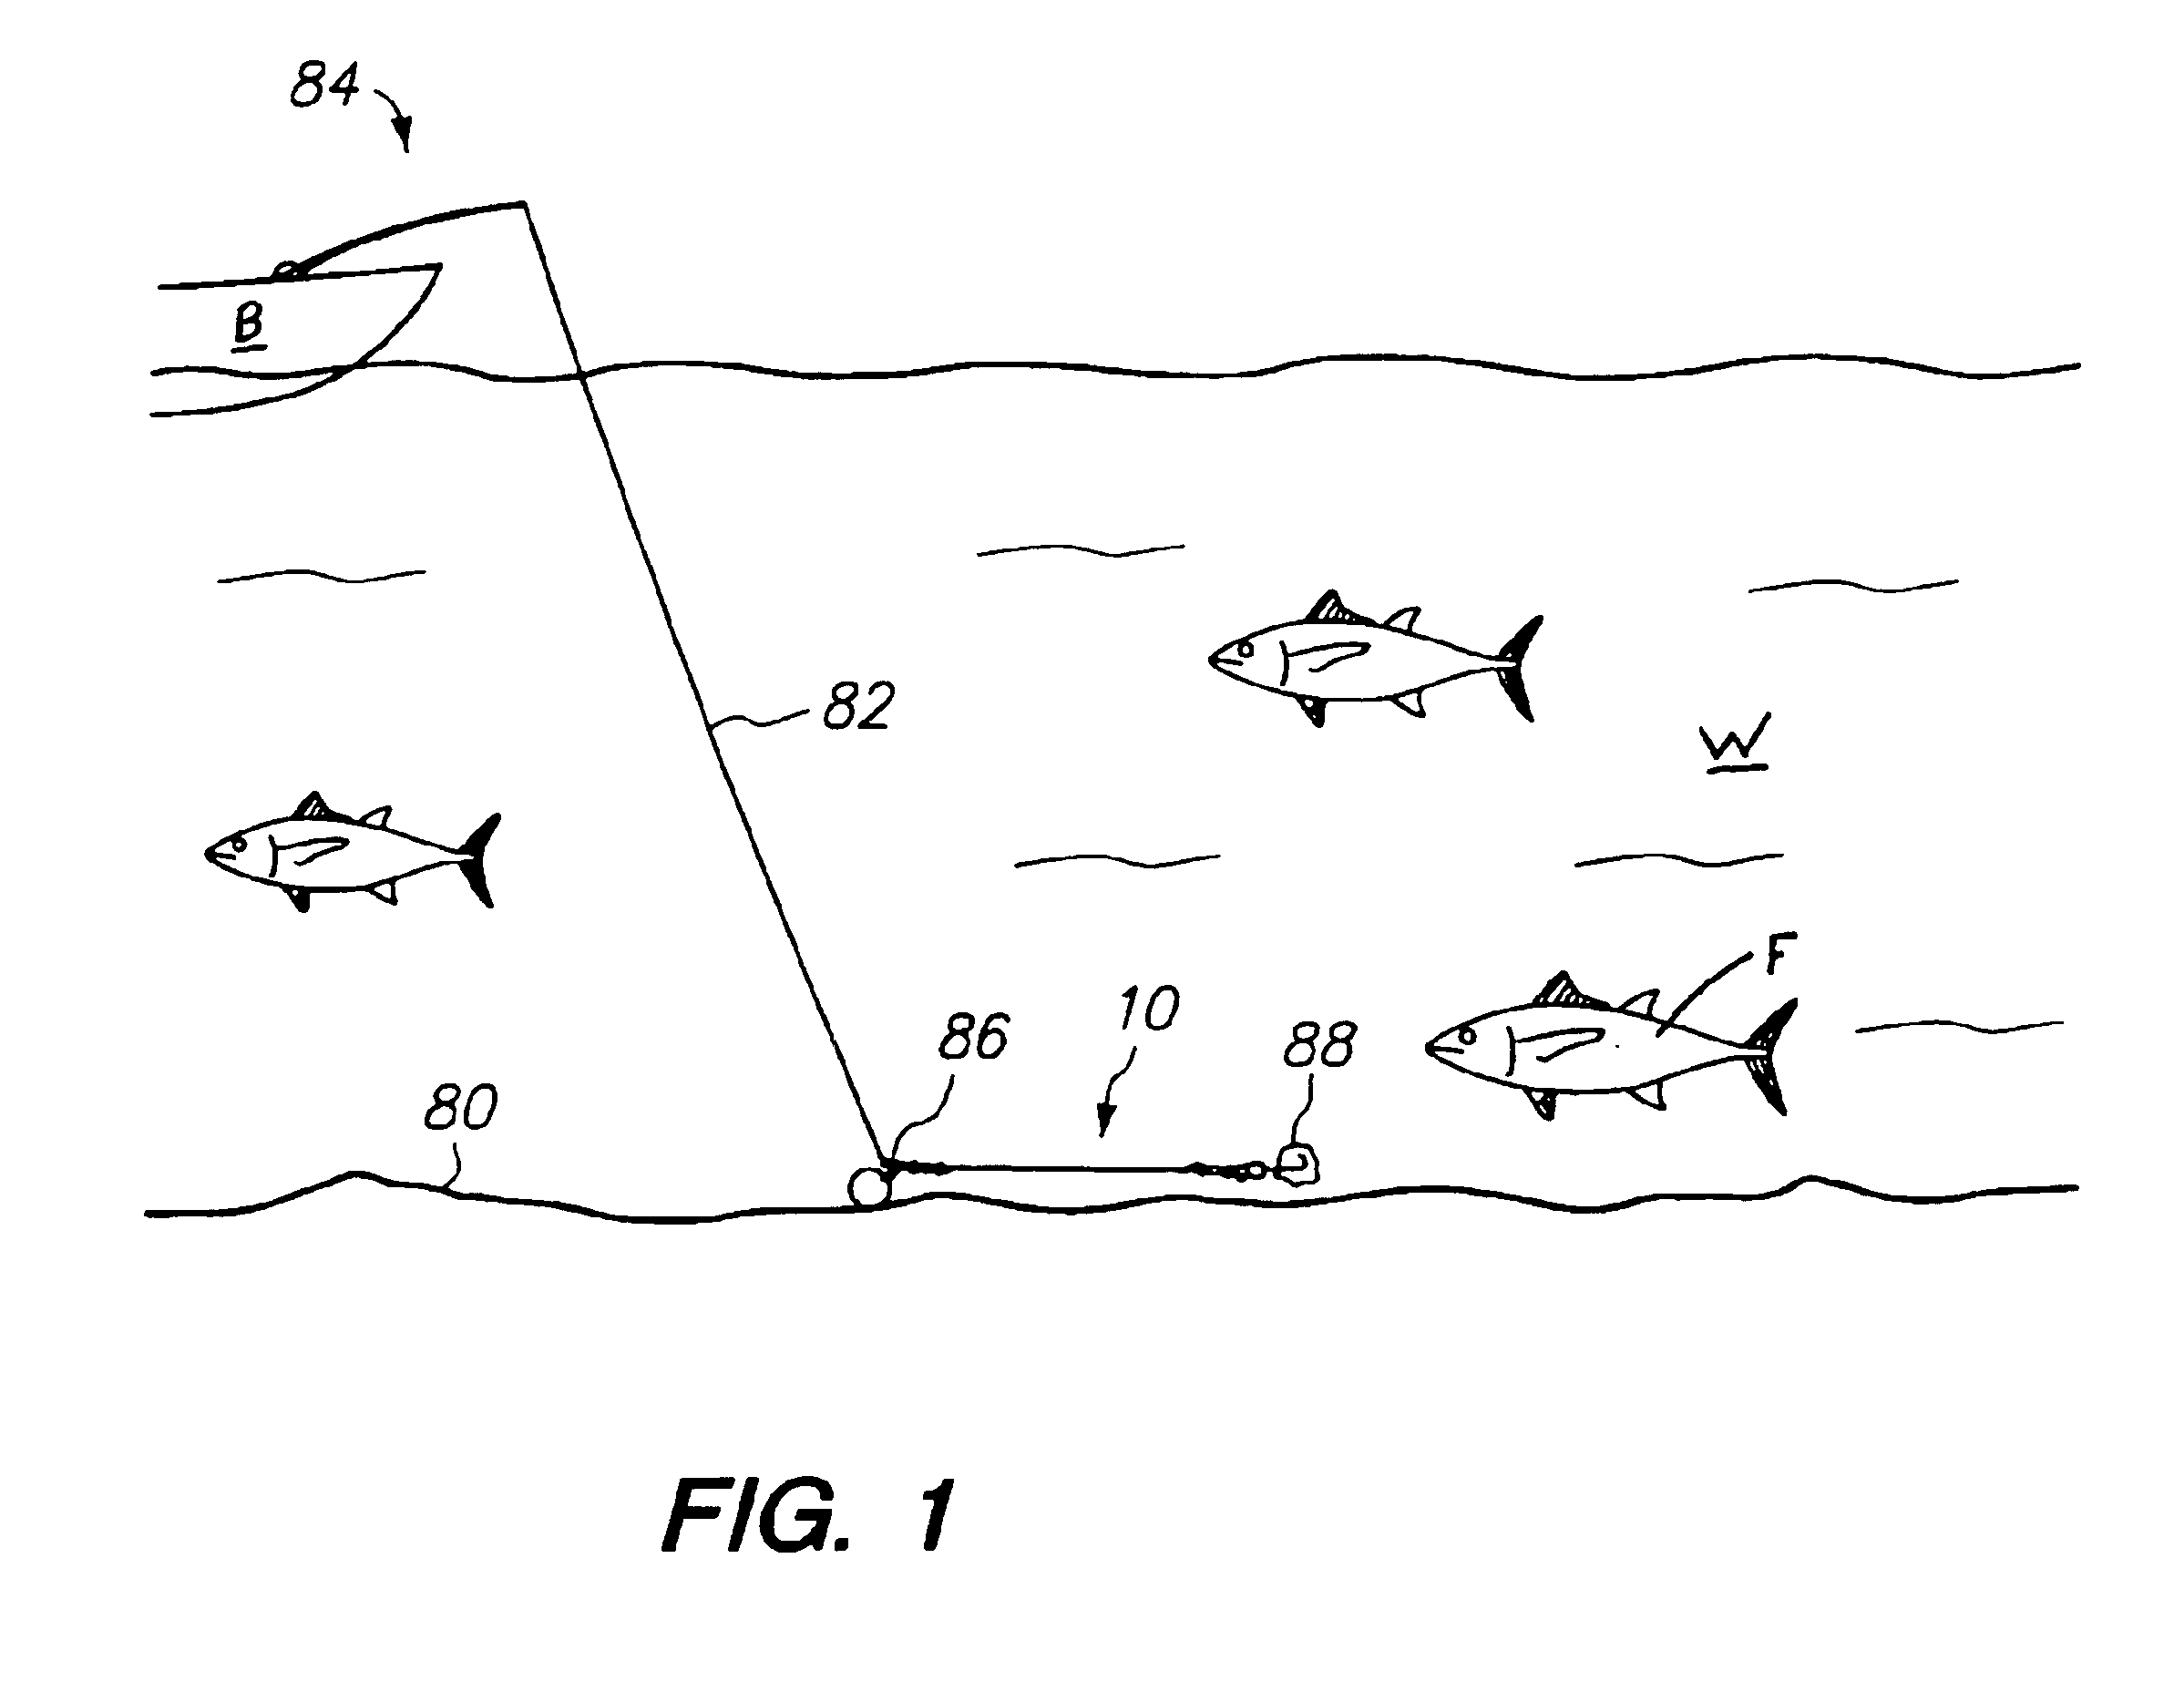 Fishing leader apparatus and method of making same